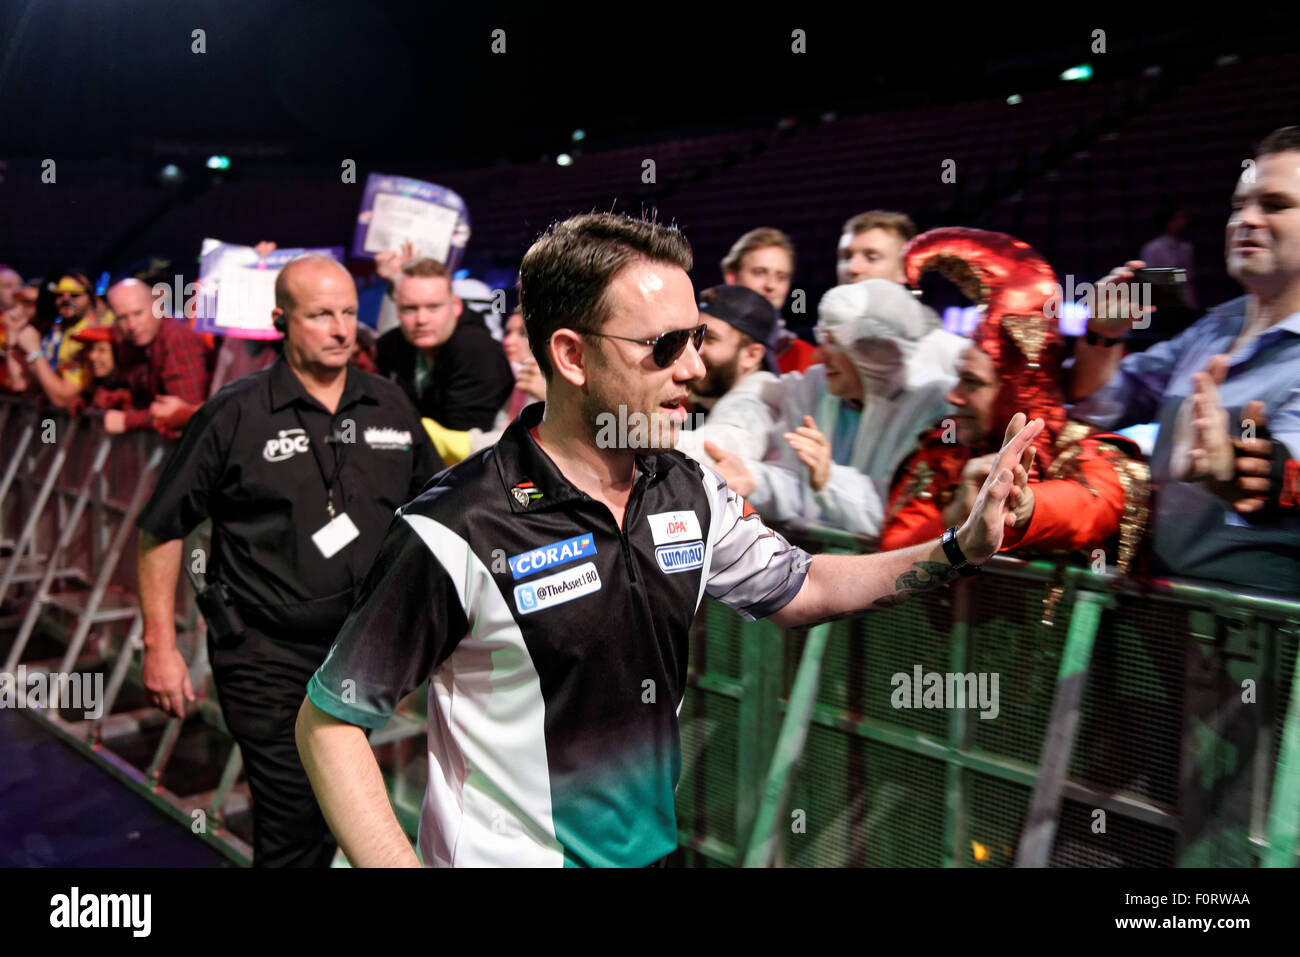 Sydney, AUSTRALIA - August 20, 2015: Fans cheer as Professional Darts star Paul  Nicholson enters the arena